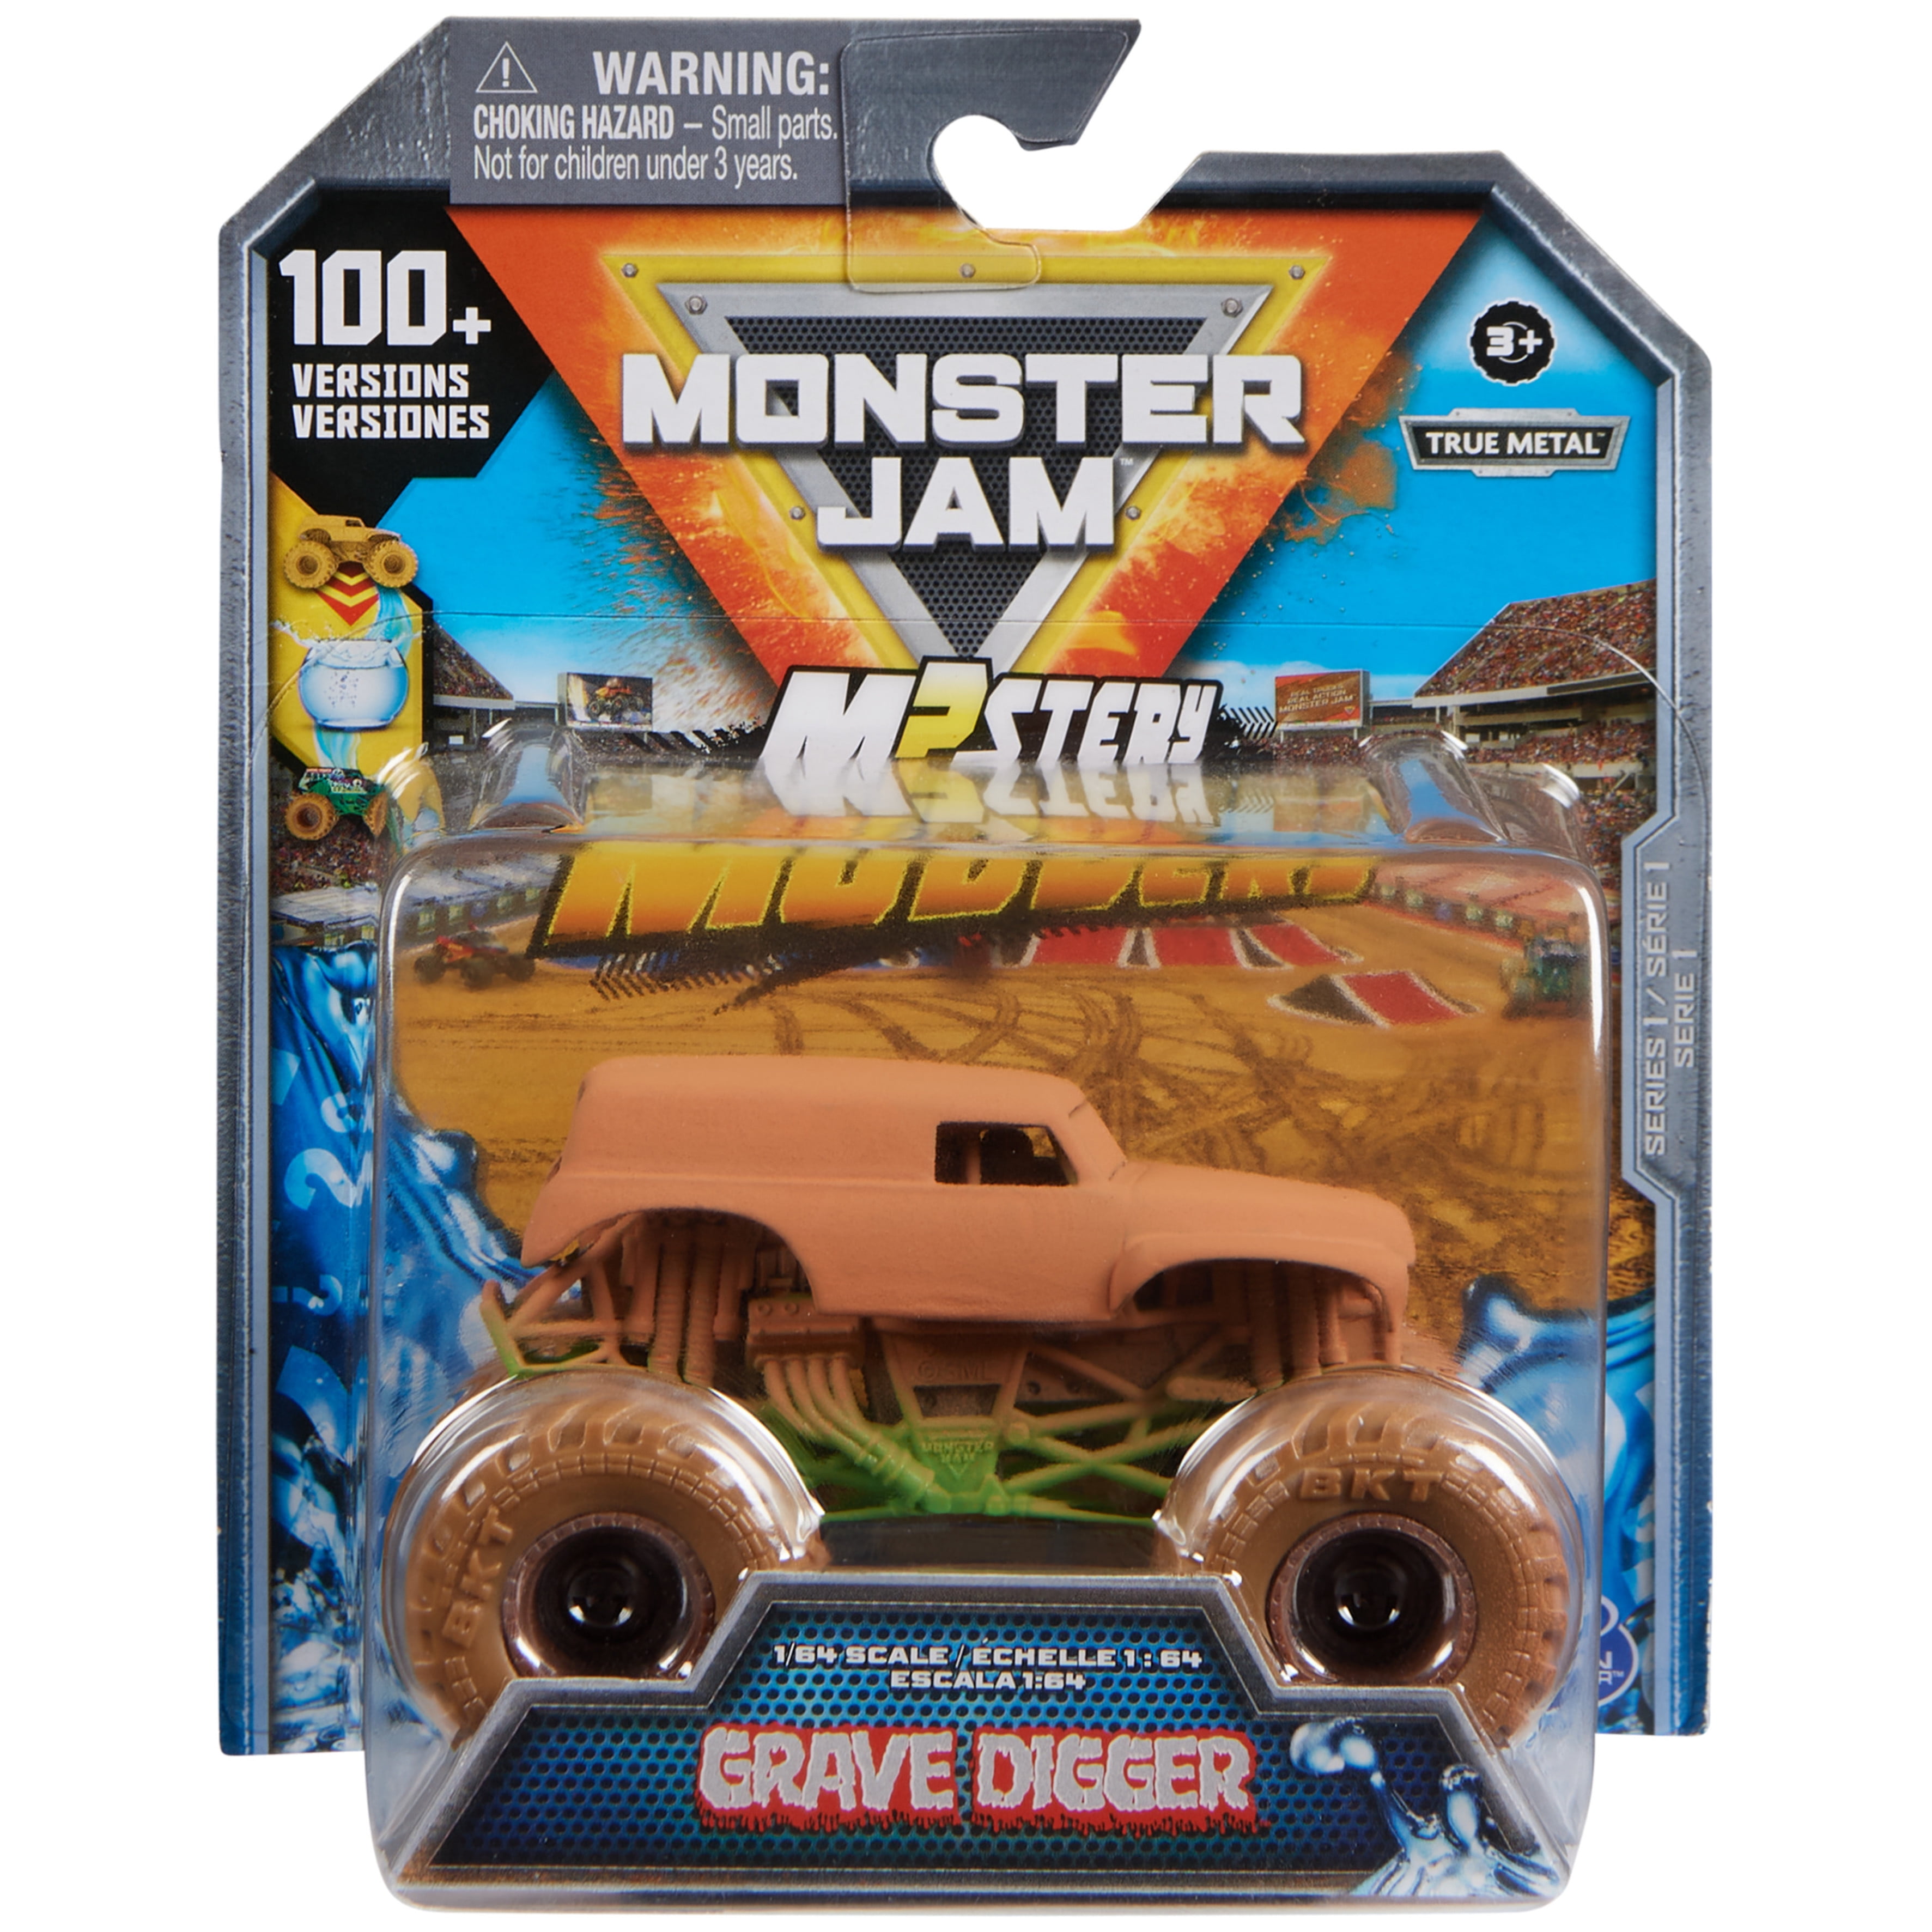 Monster Jam Gold Truck Bundle